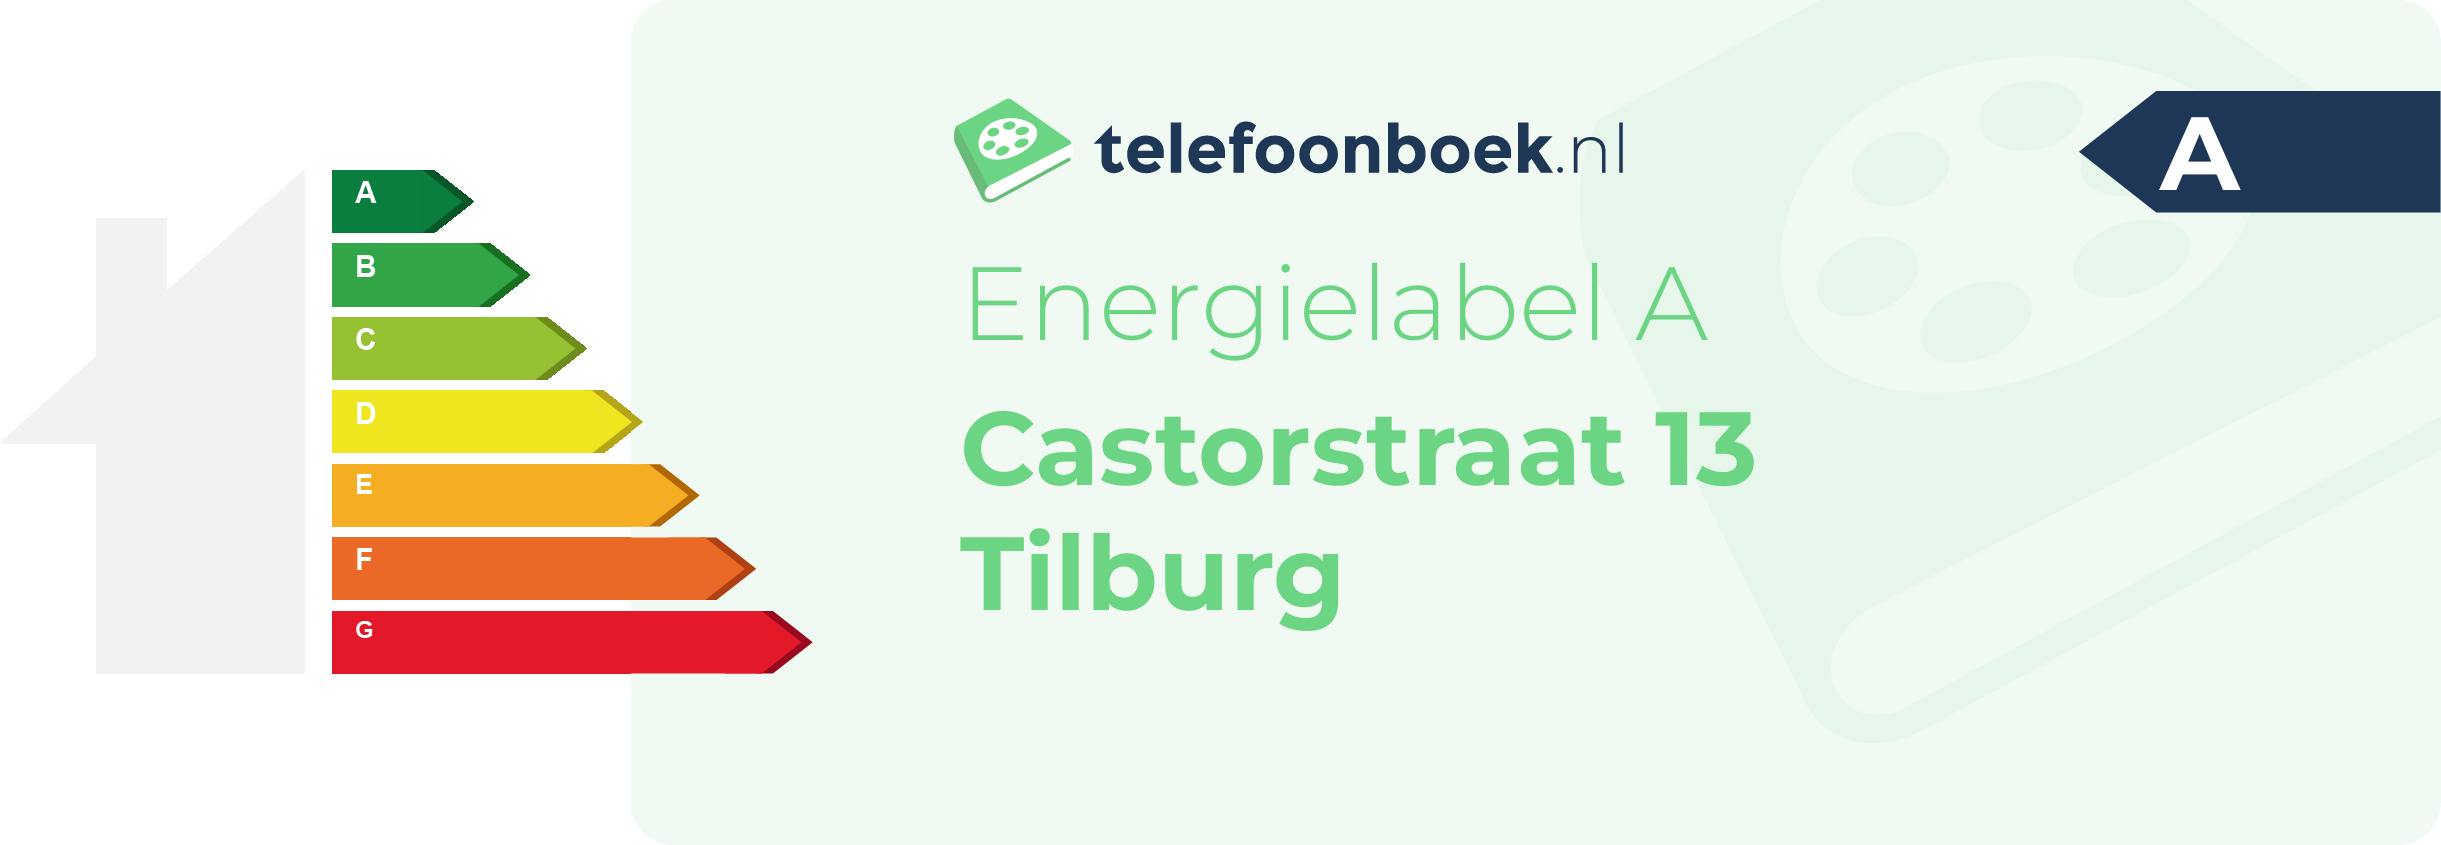 Energielabel Castorstraat 13 Tilburg